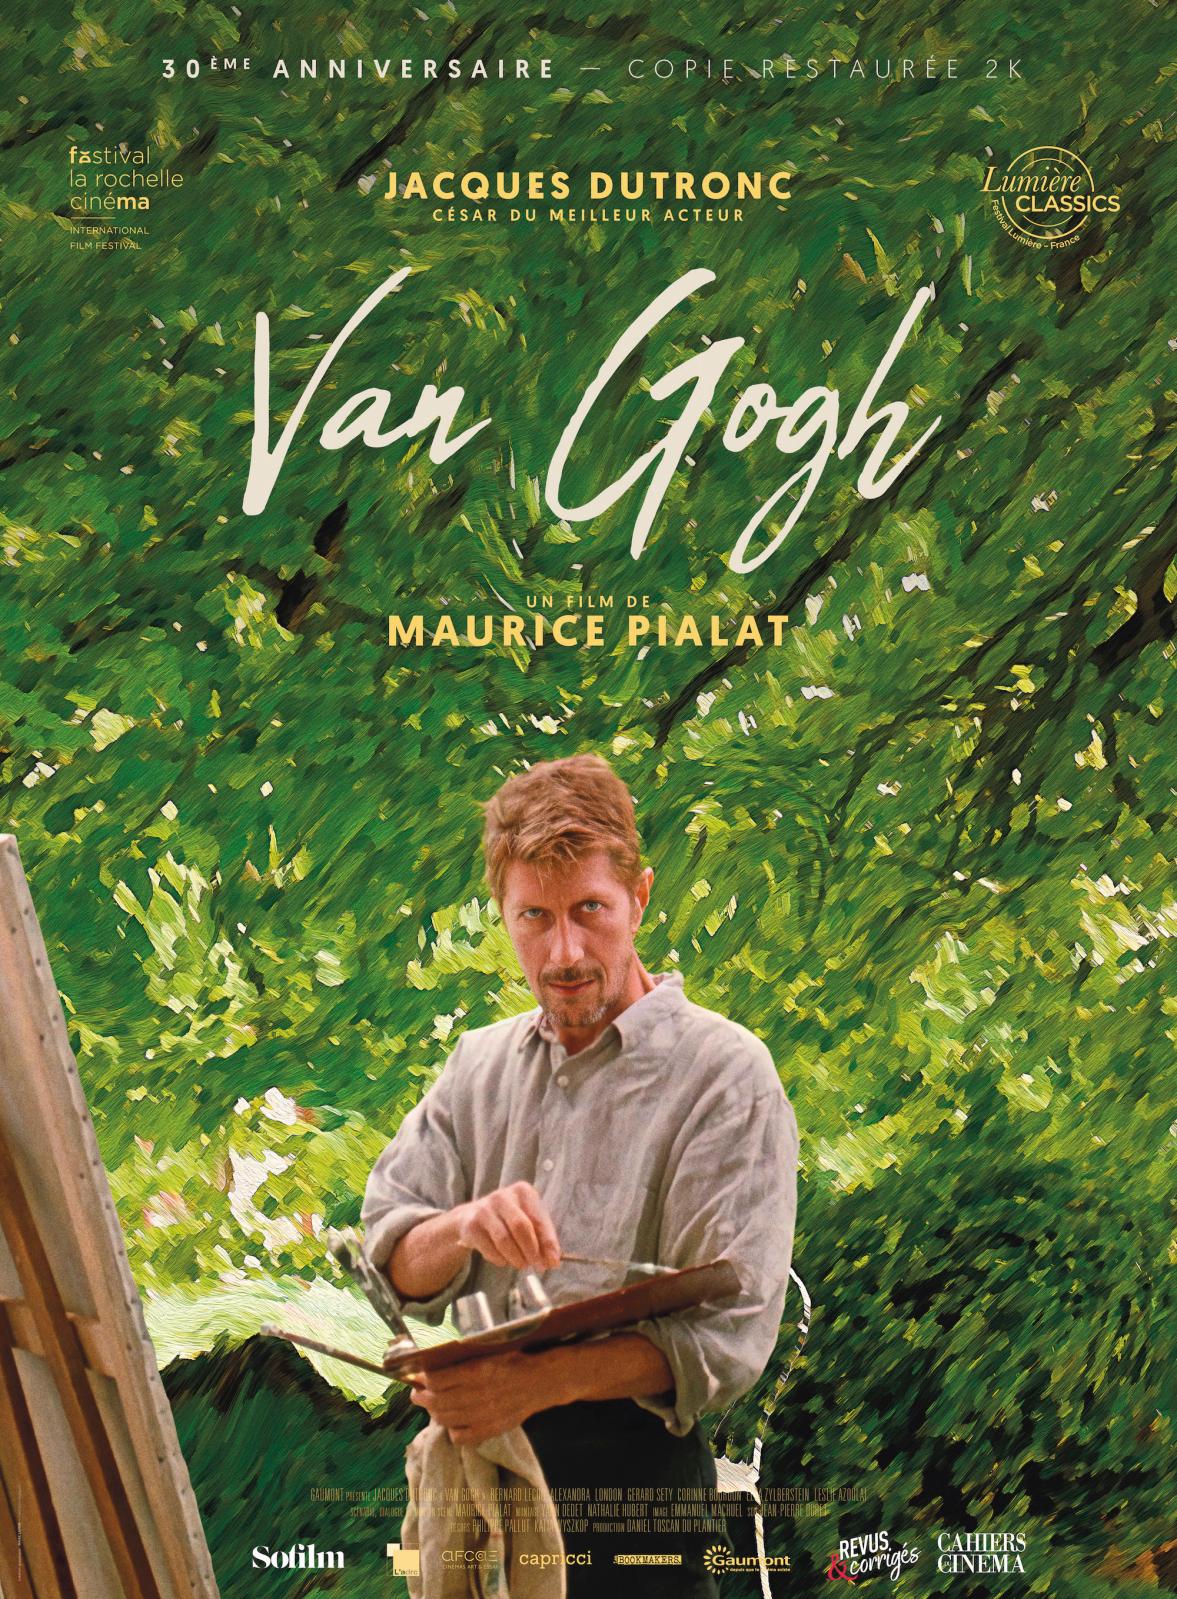 Cinéma : revoir le Van Gogh de Pialat